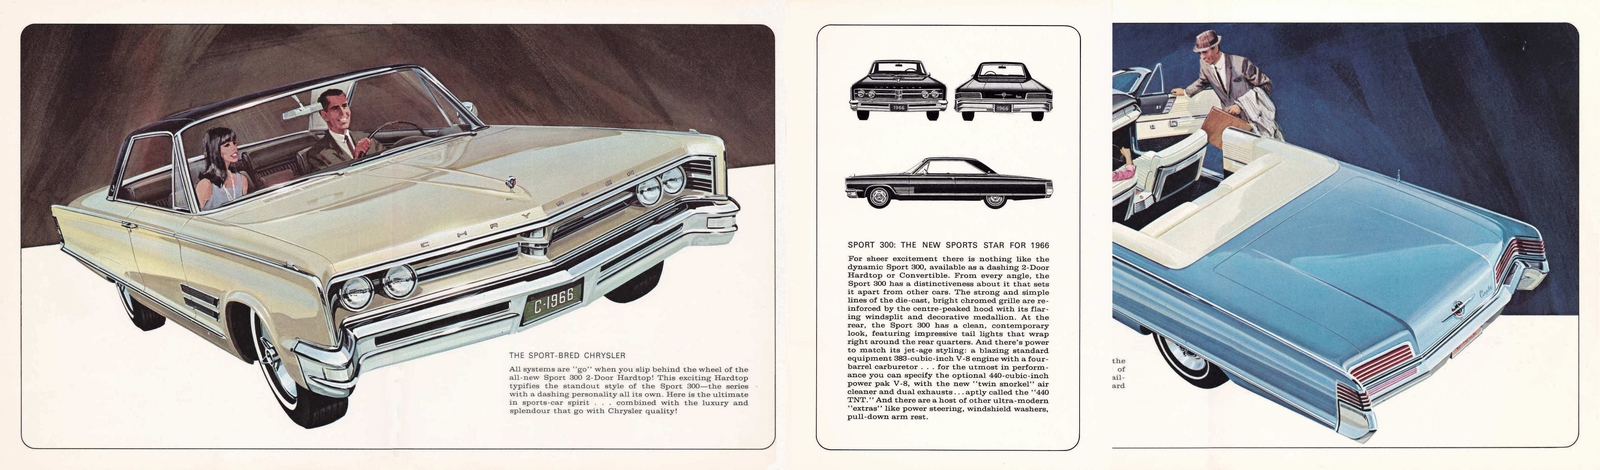 n_1966 Chrysler (Cdn)-06-07a.jpg